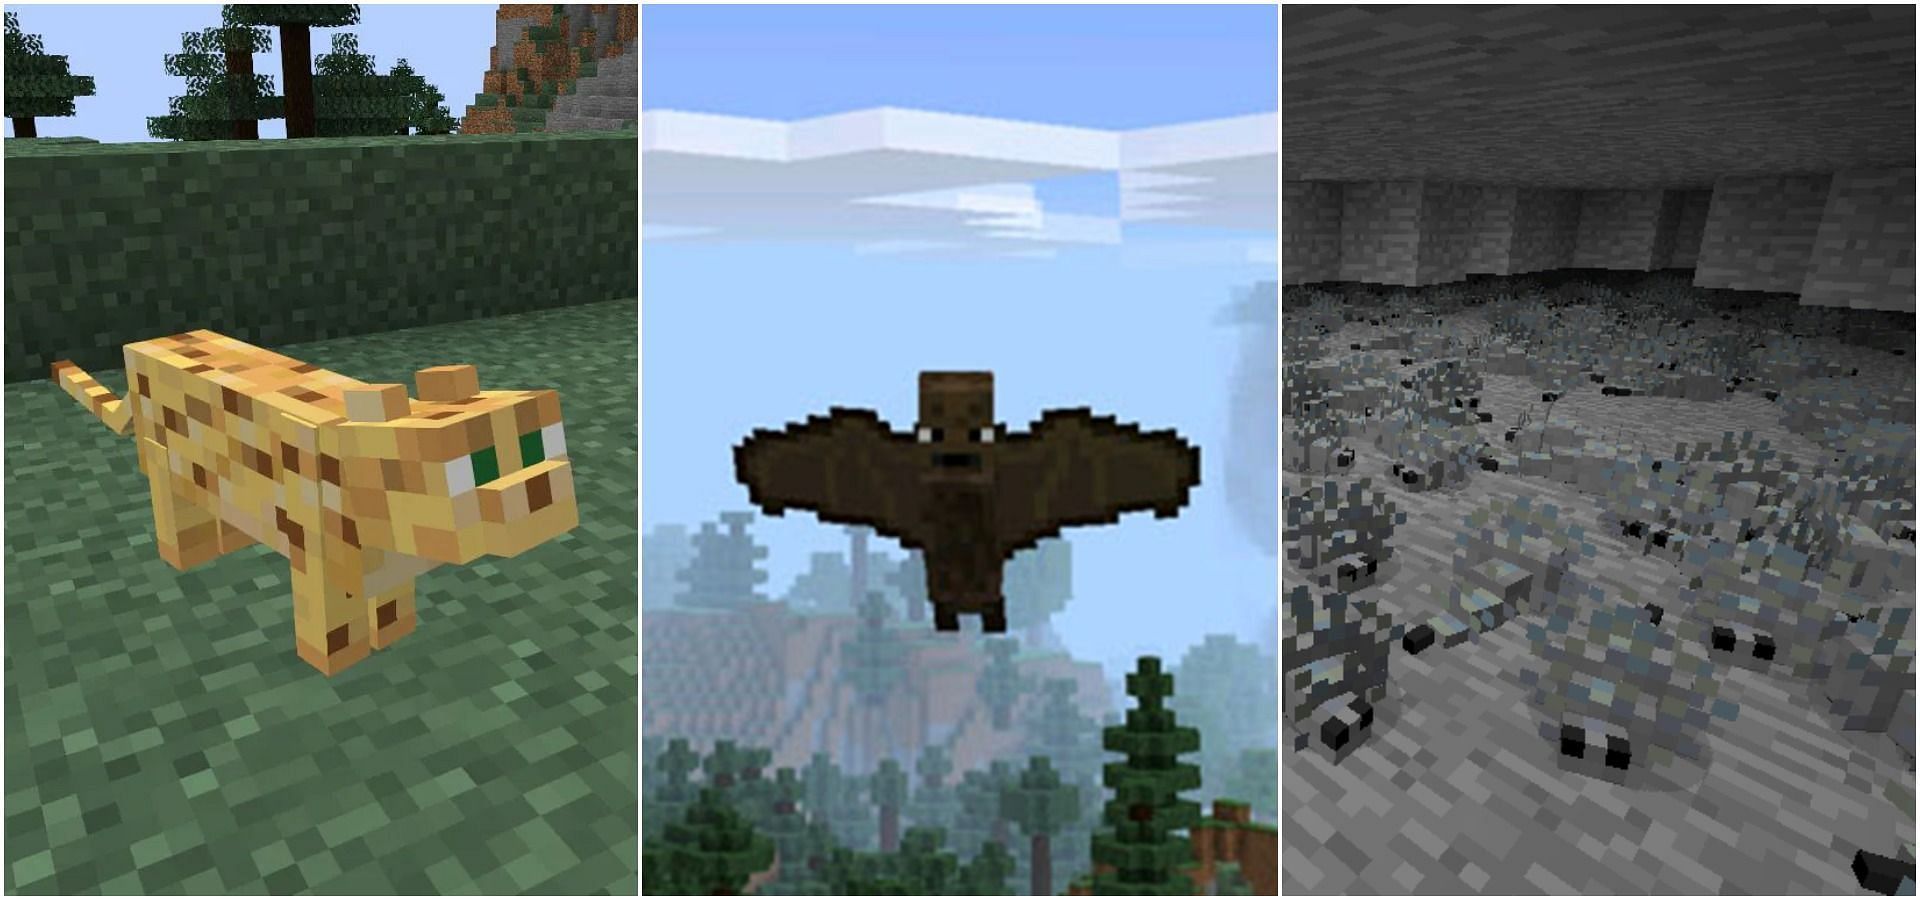 Ocelot, Bat, Silverfish in Minecraft (Image via Minecraft)